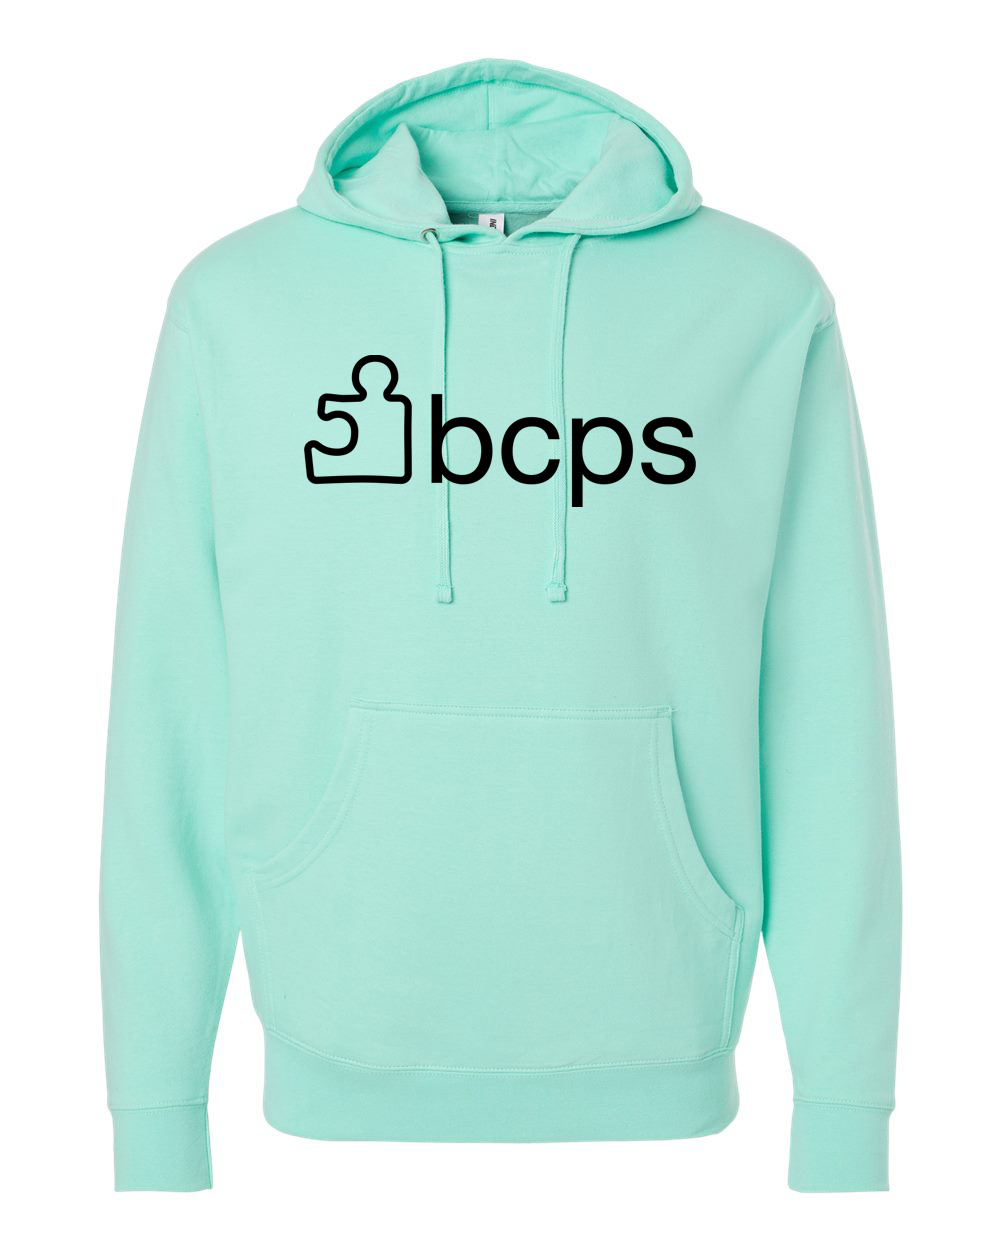 BCPS | Independent Brand Hoodie